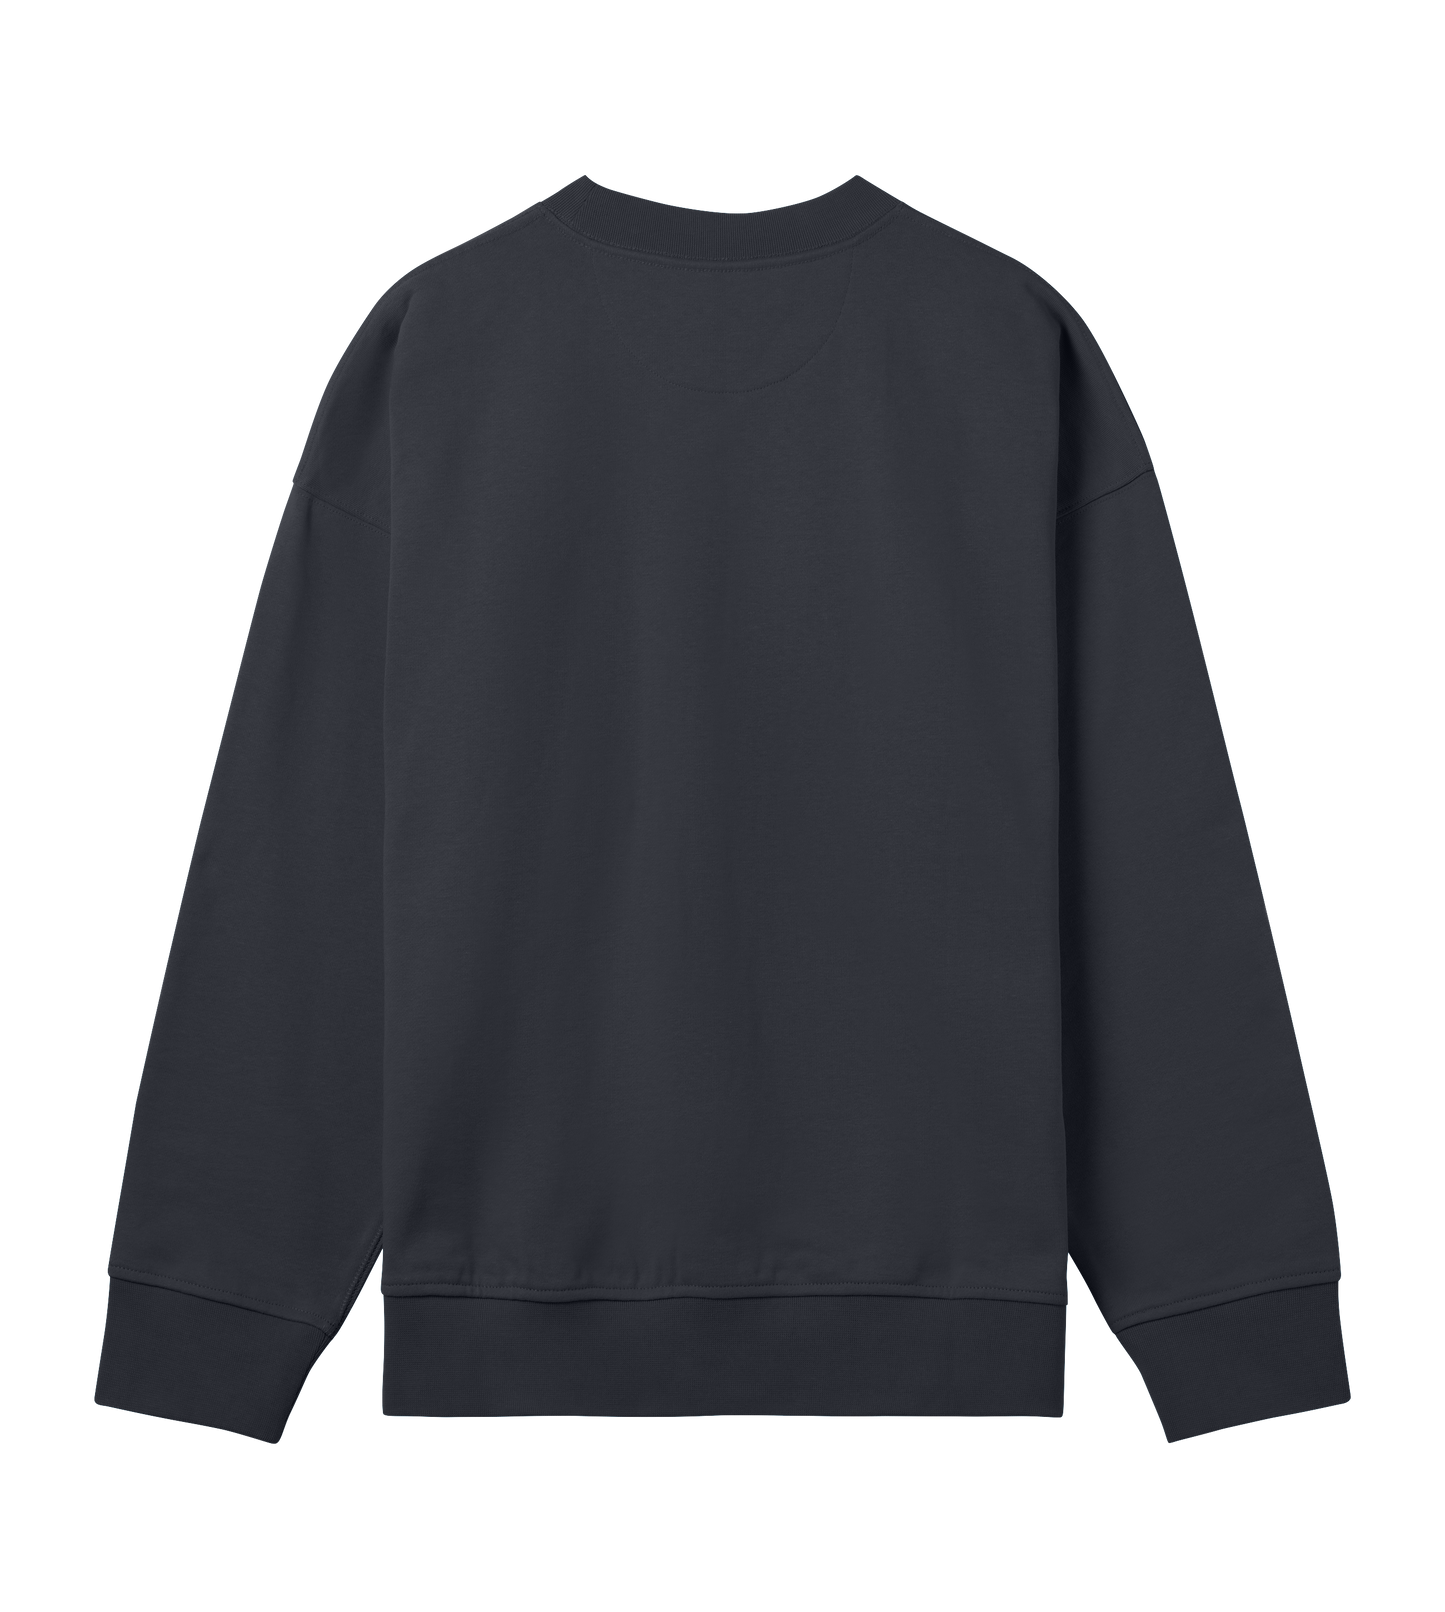 comeherefloyd box logo prime (boxy) sweatshirt - men - off black